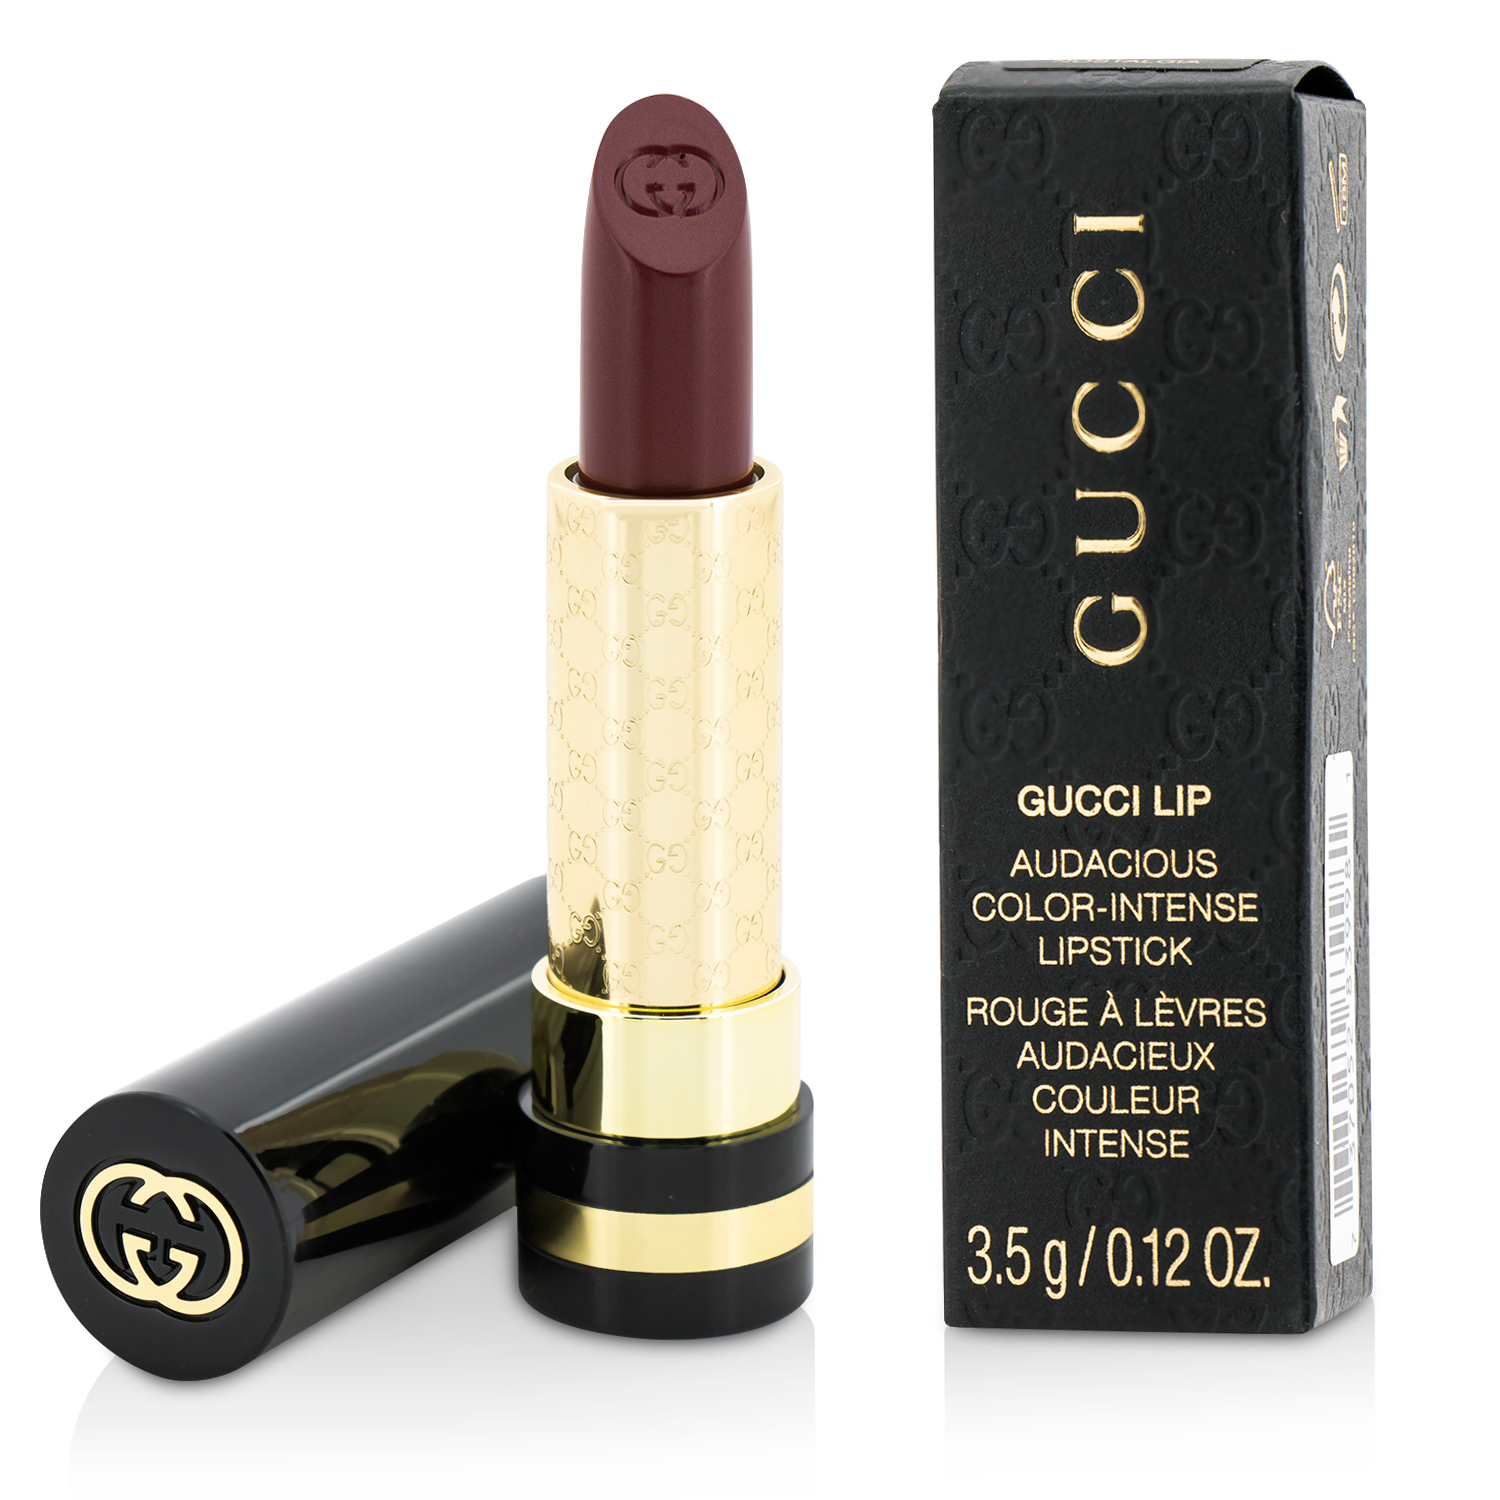 Audacious Color Intense Lipstick - #190 Wild Amarena Gucci Image